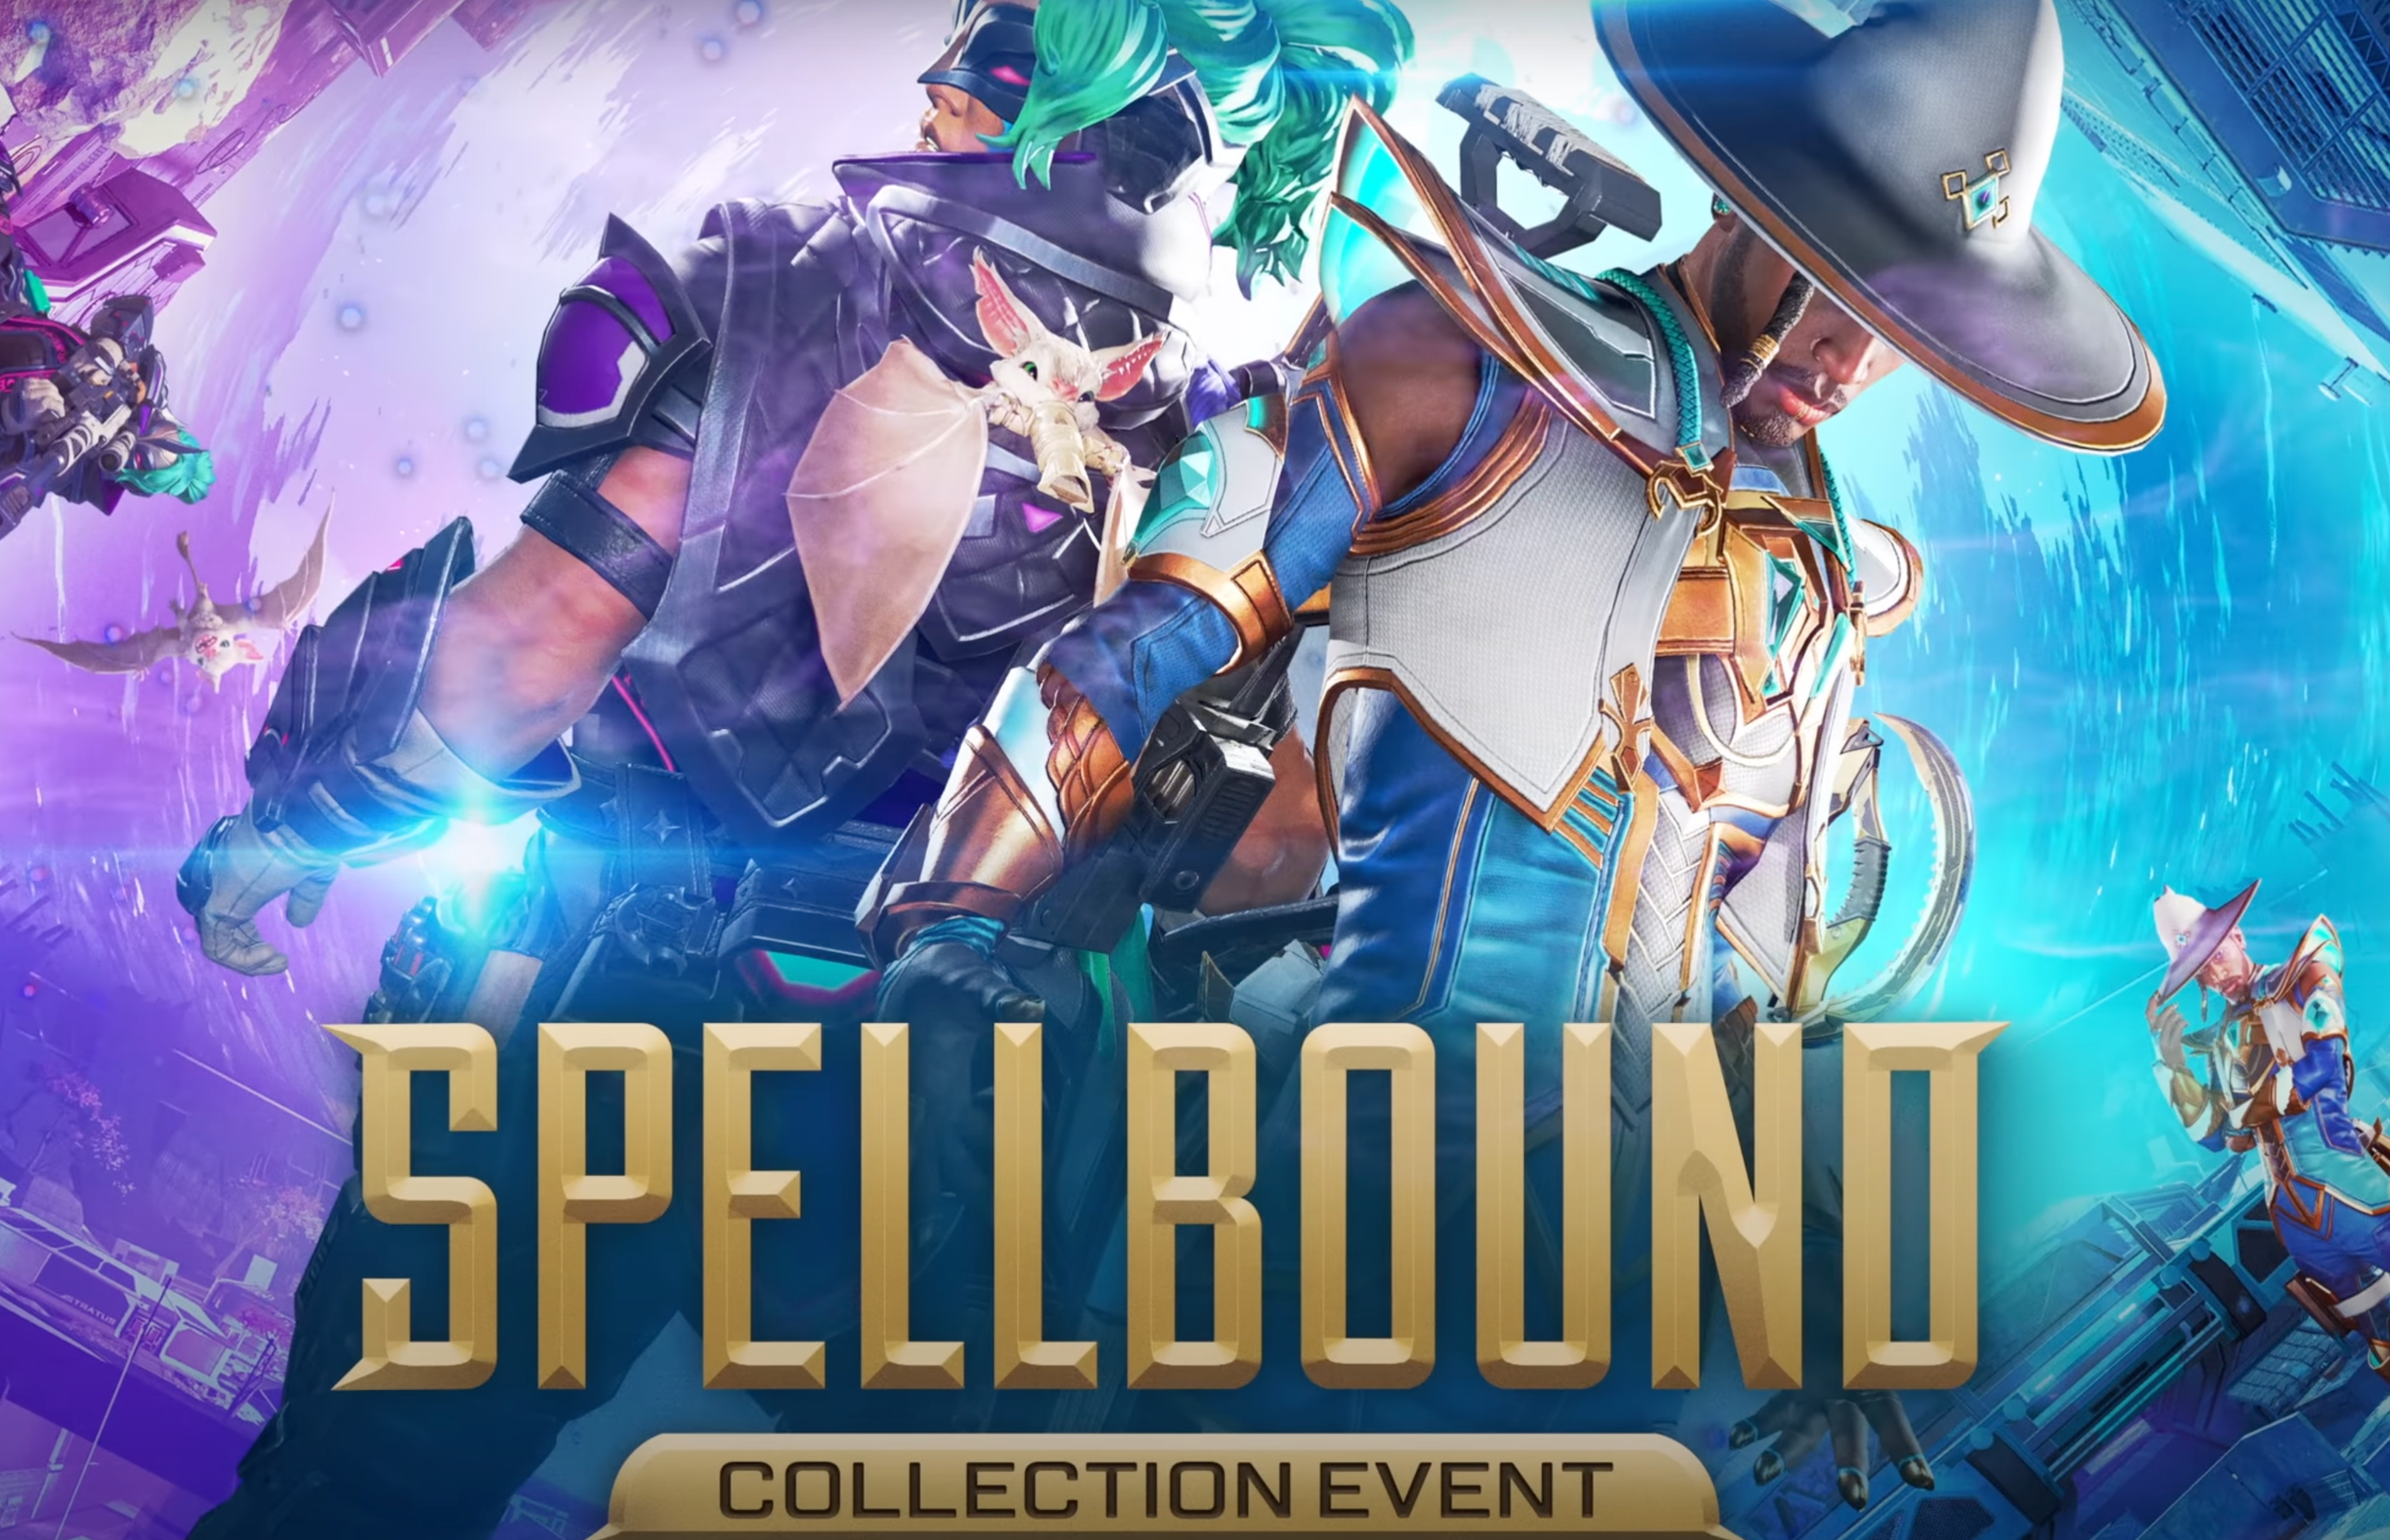 Image for Apex Legends' Spellbound Control mode kicks off next week